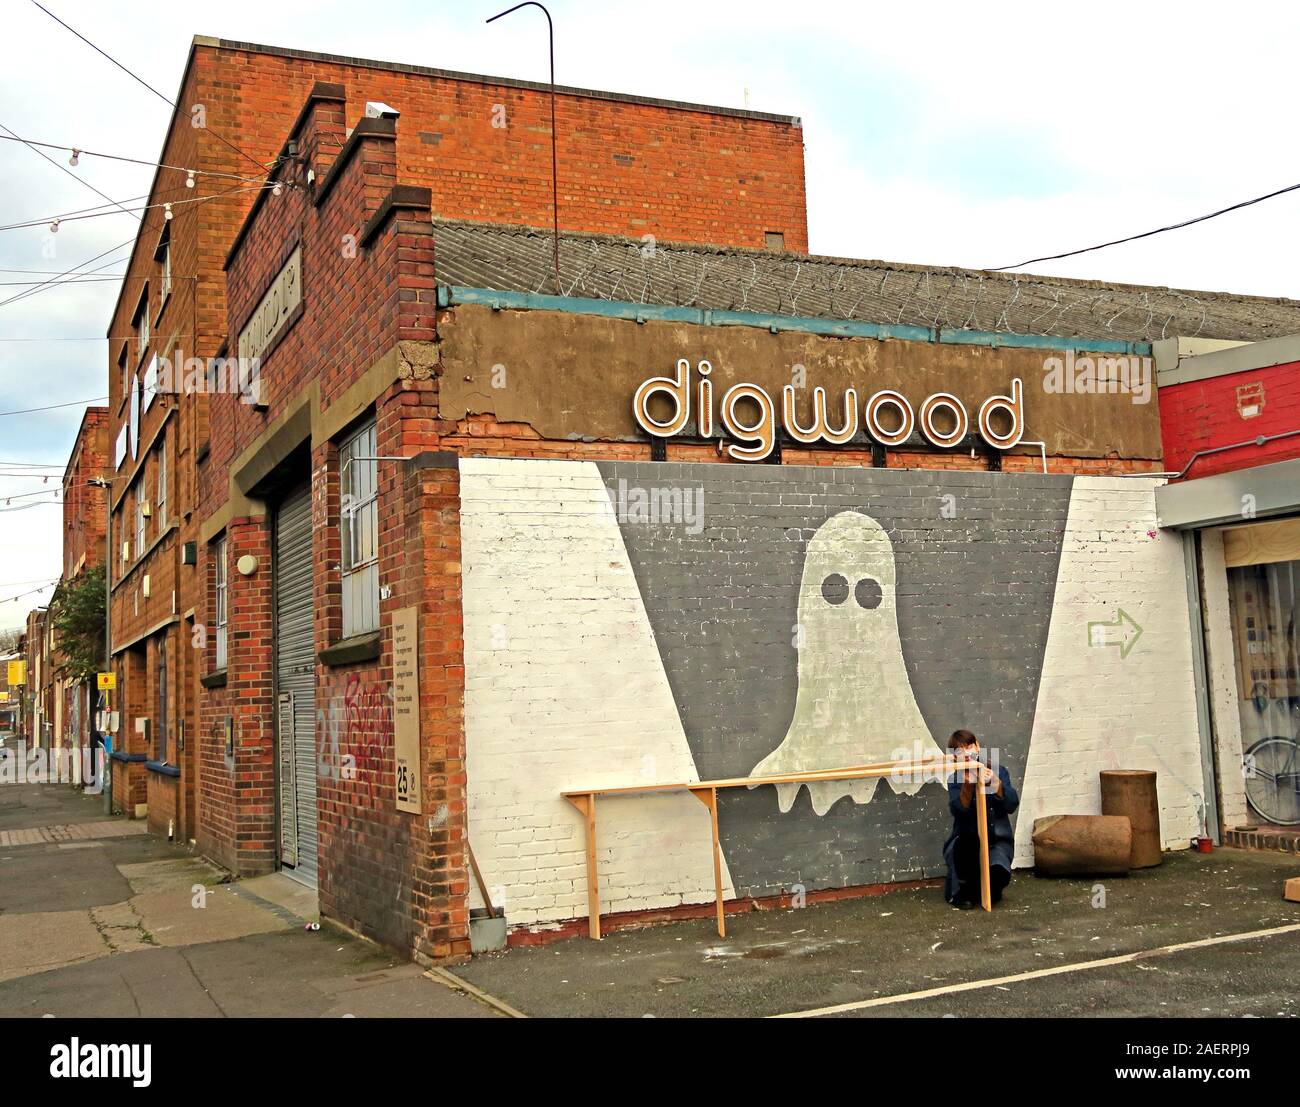 Digwood,ghost,Graffiti urbano arte callejero,en Floodgate St,Digbeth,Bordesley & Highgate,Birmingham,West Midlands,Inglaterra,Reino Unido,B5 5ST Foto de stock